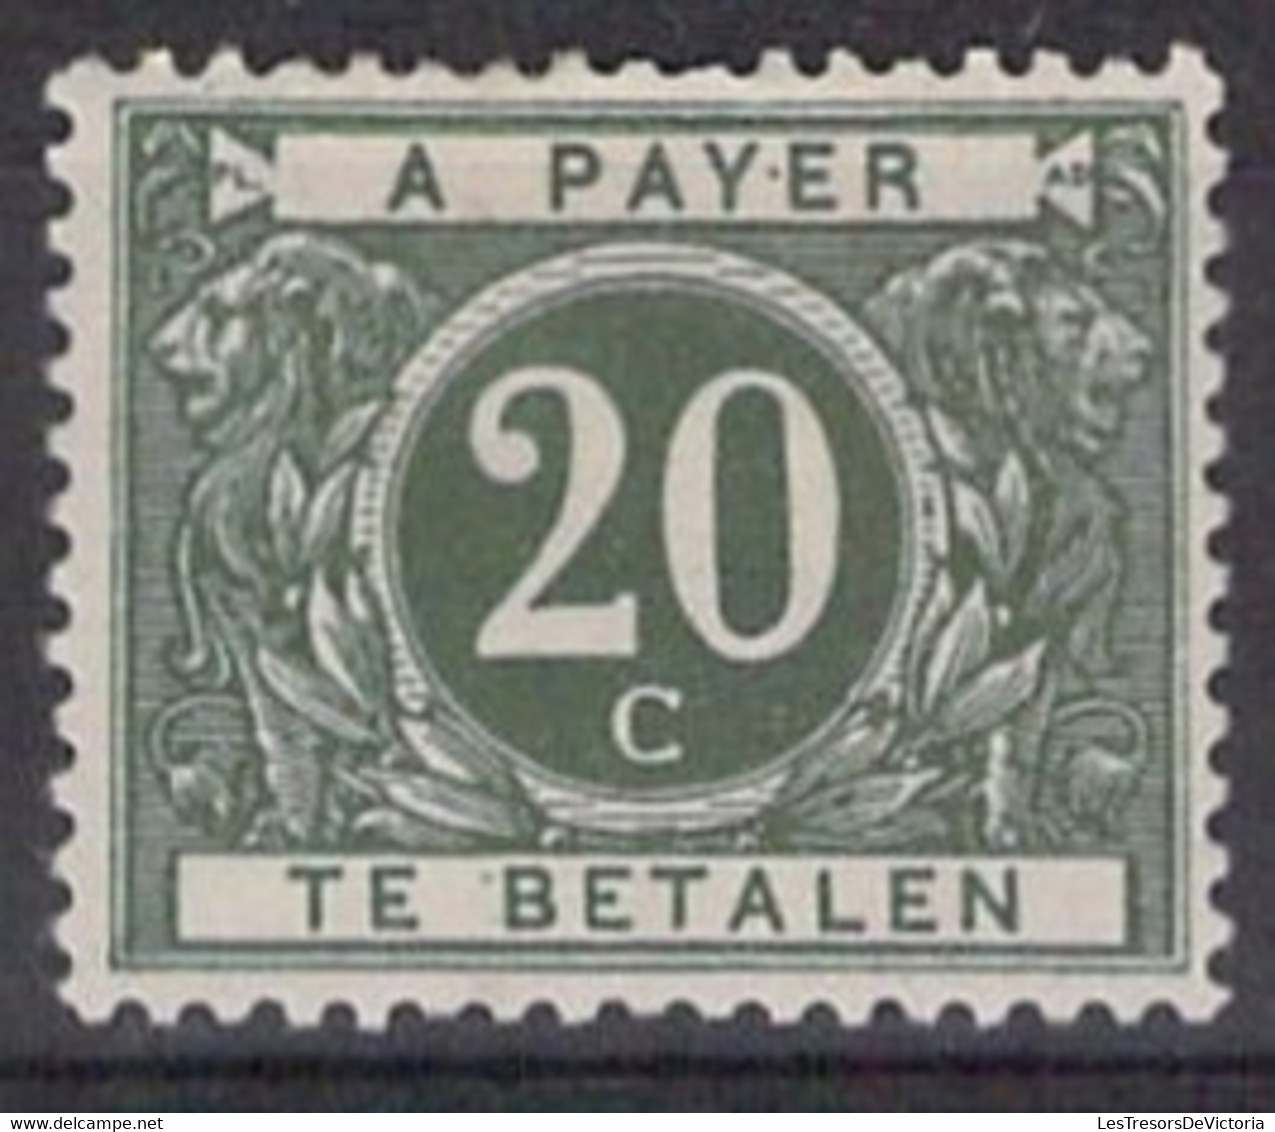 Belgique - COB TX 14 * - Beau Centrage - 1916 - Cote 150 COB 2022 - Sellos